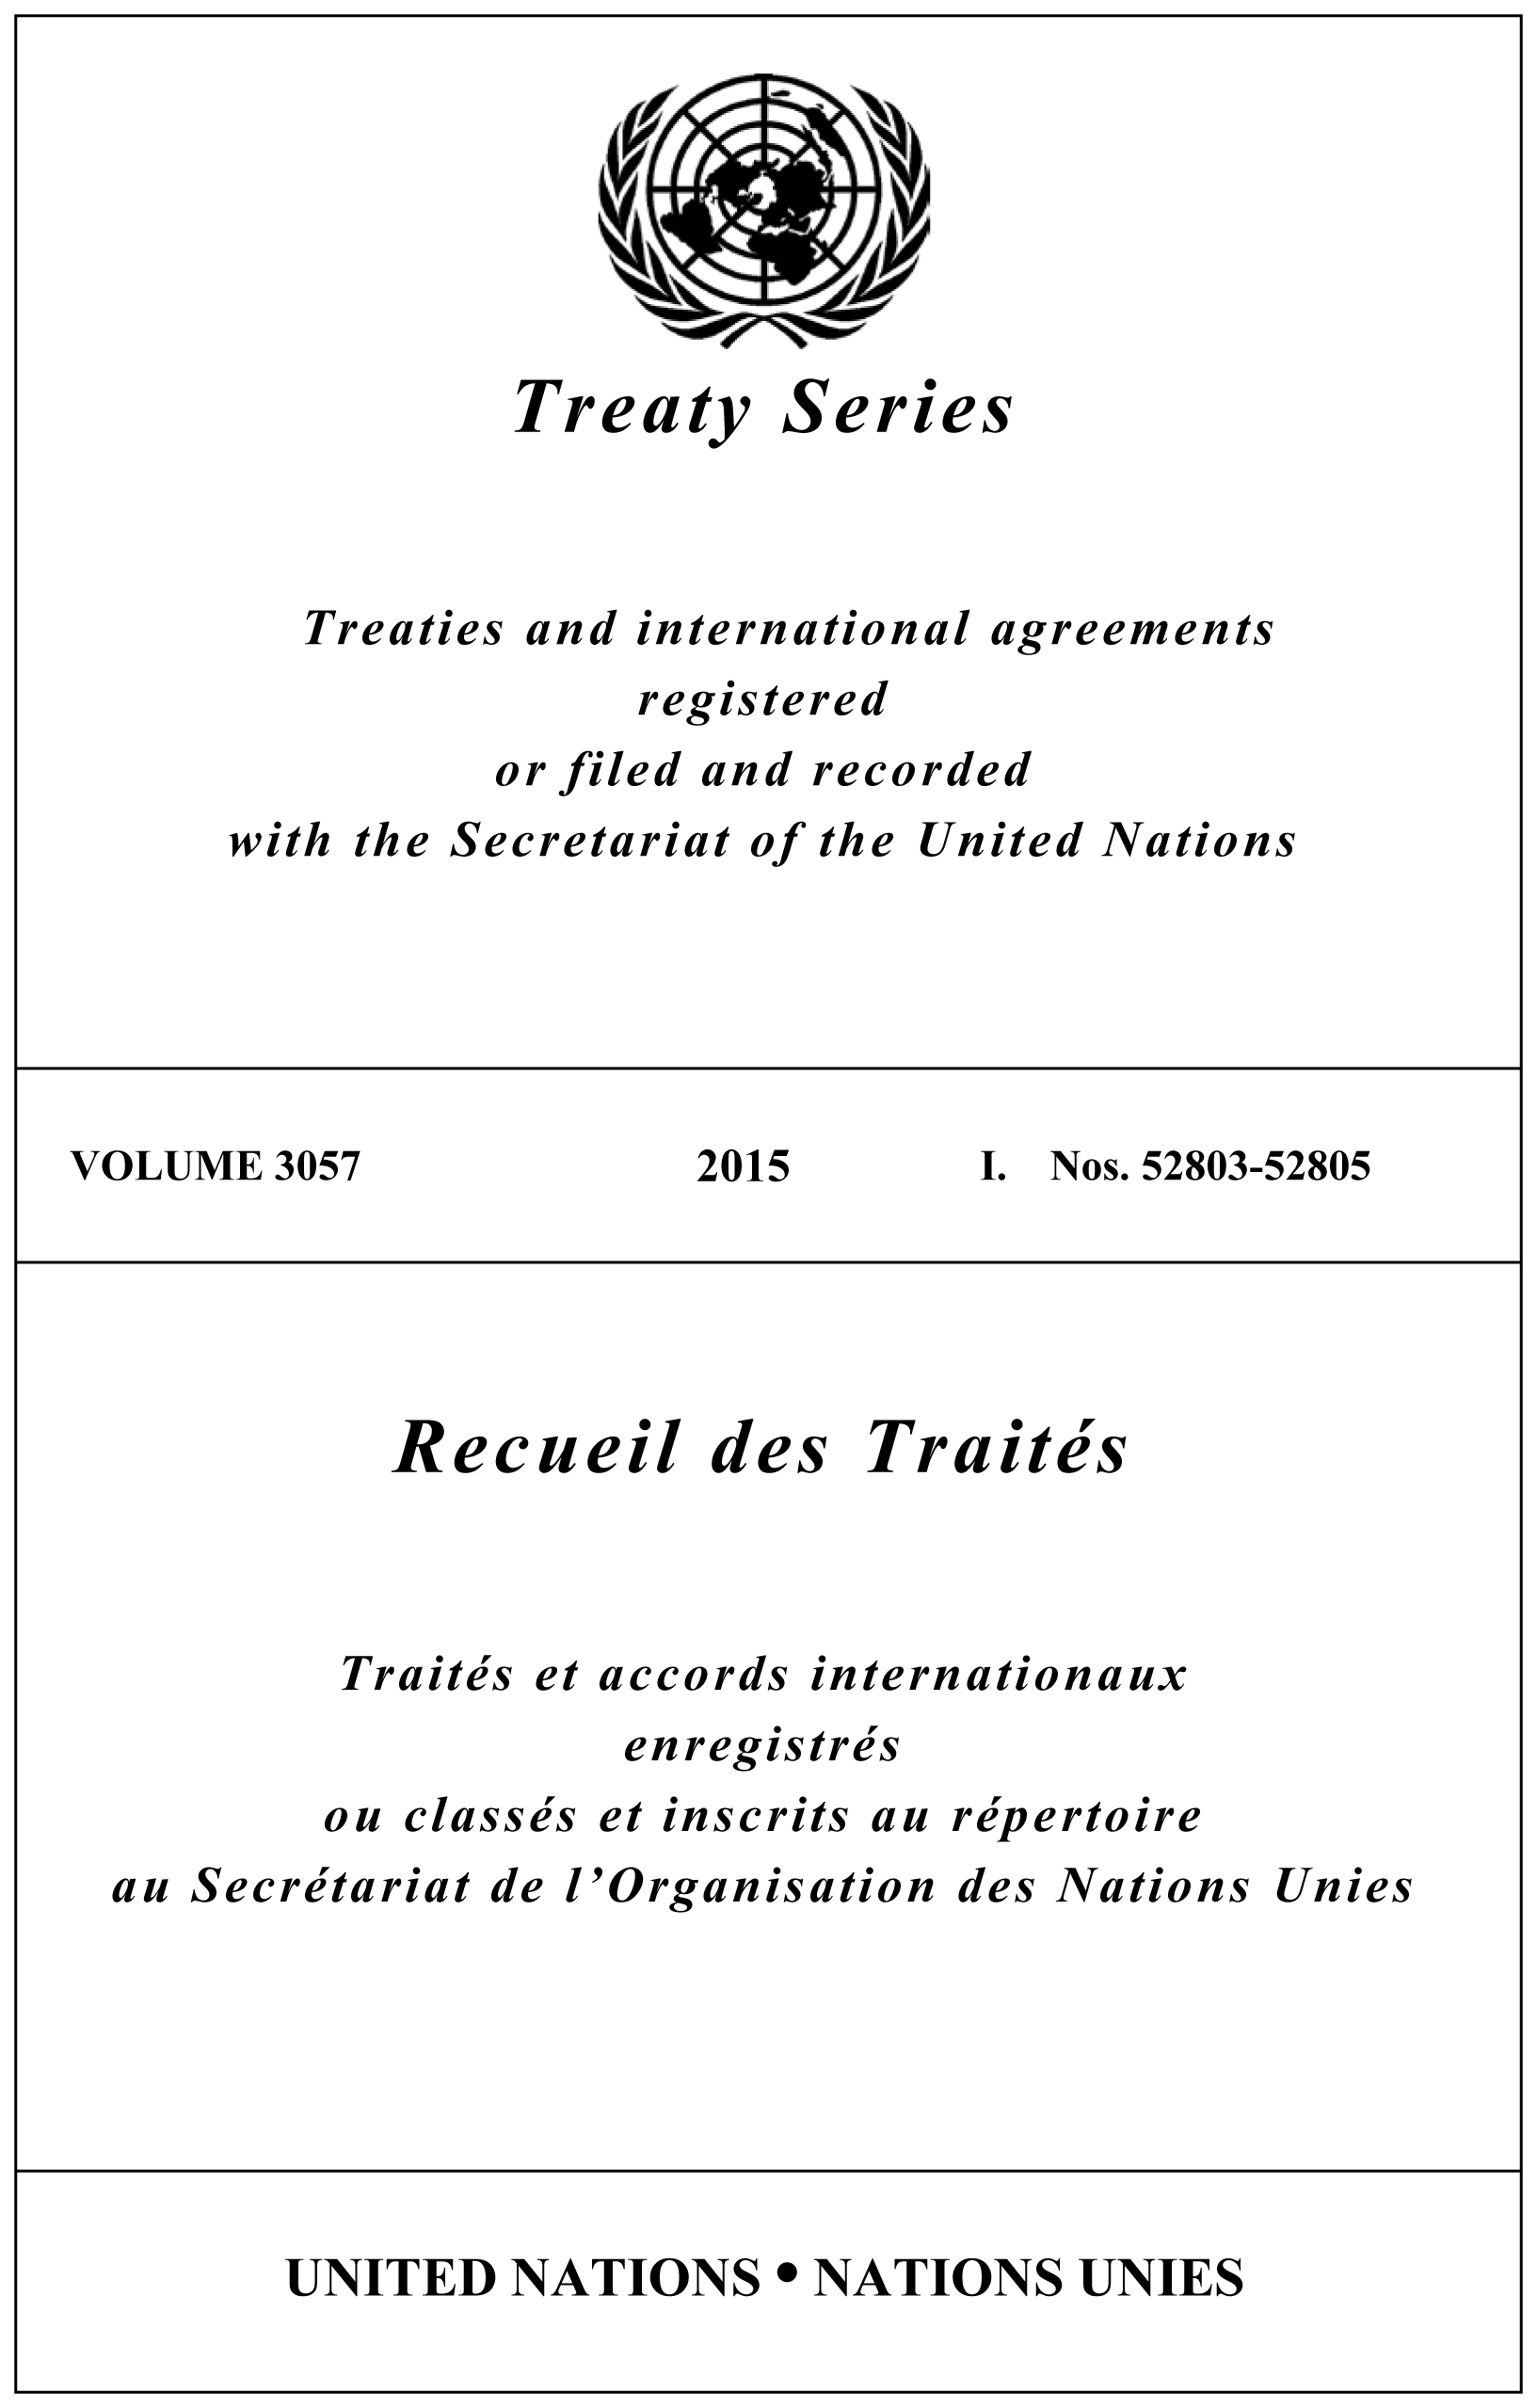 image of Treaty Series 3057